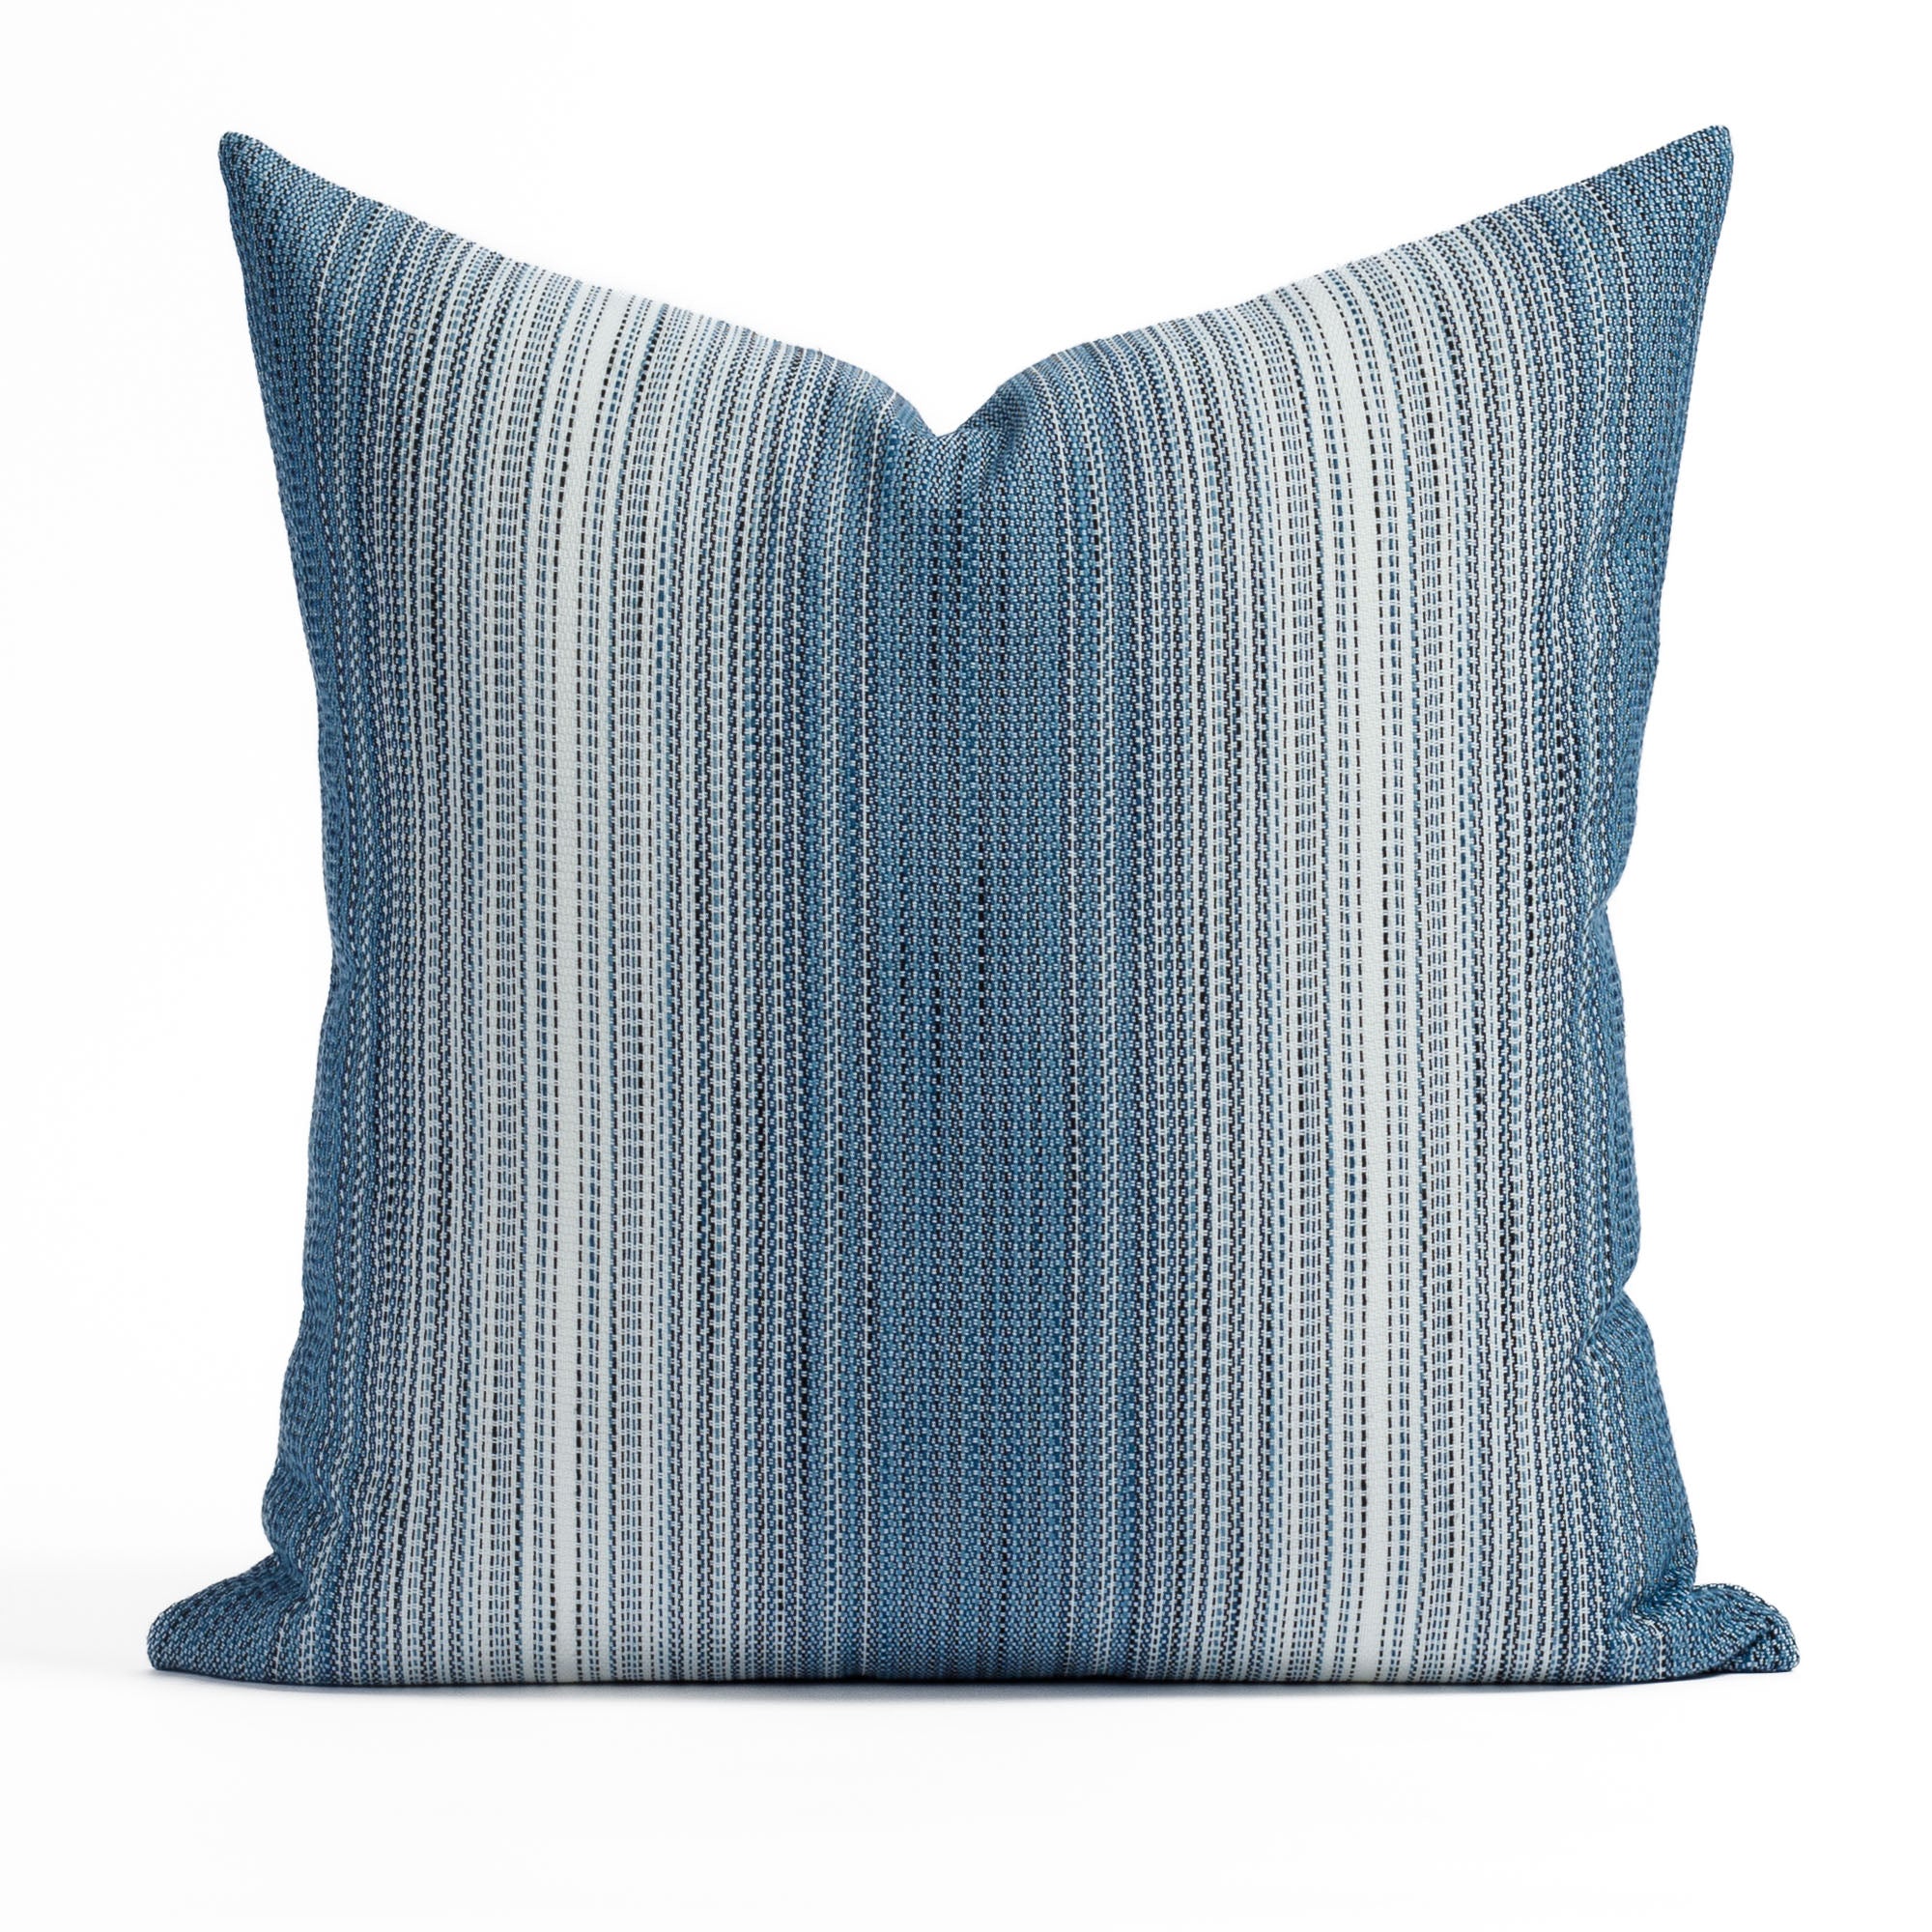 Mateo 20x20 pillow indigo, a blue and white striped outdoor Tonic Living pillow